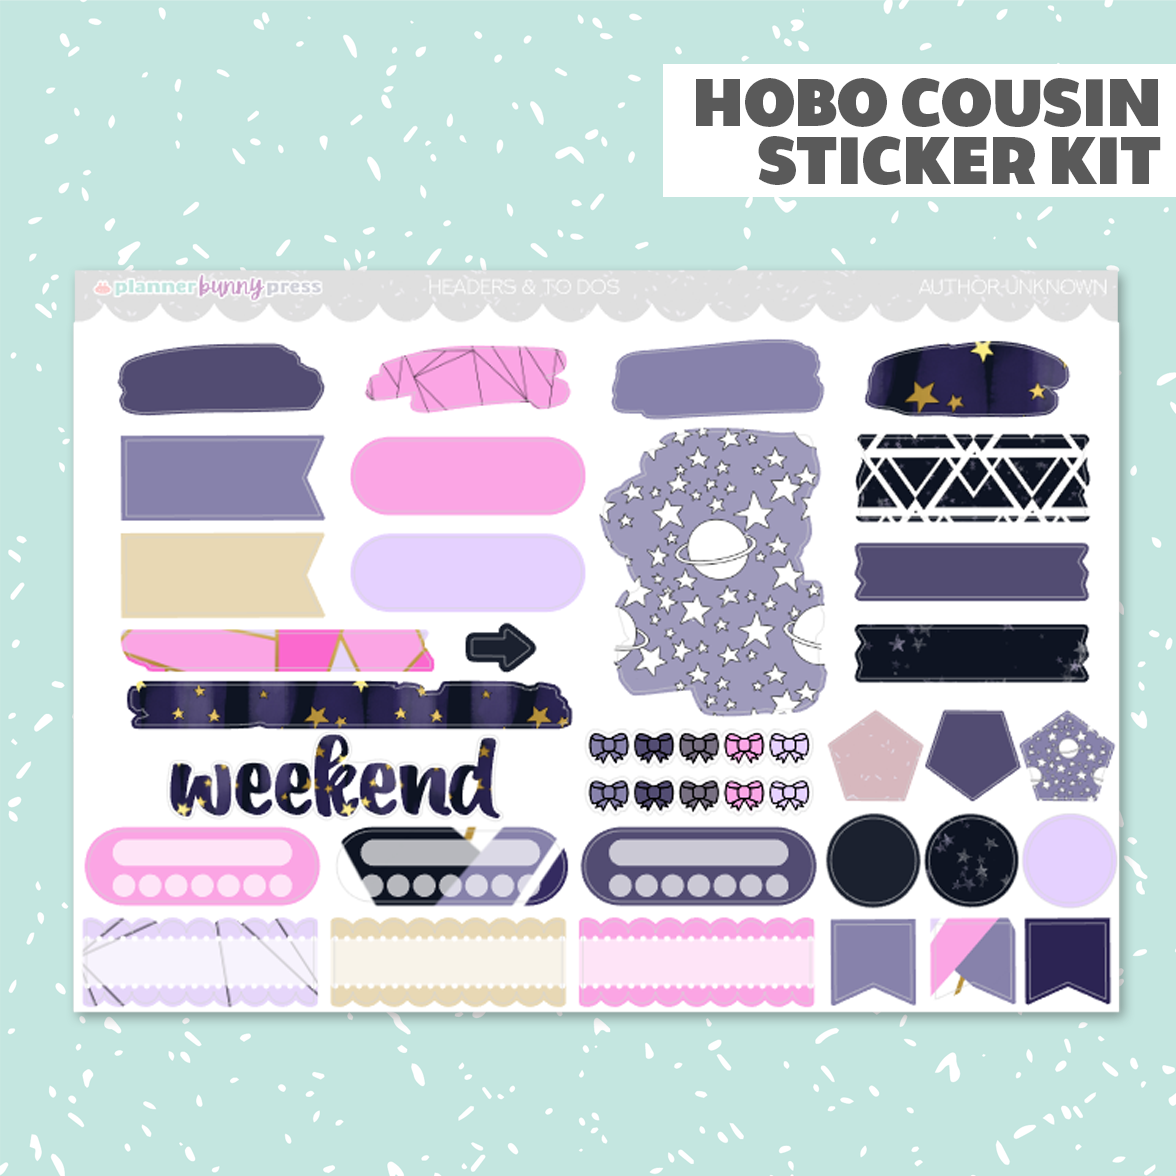 Author Unknown | Hobonichi Cousin Sticker Kit